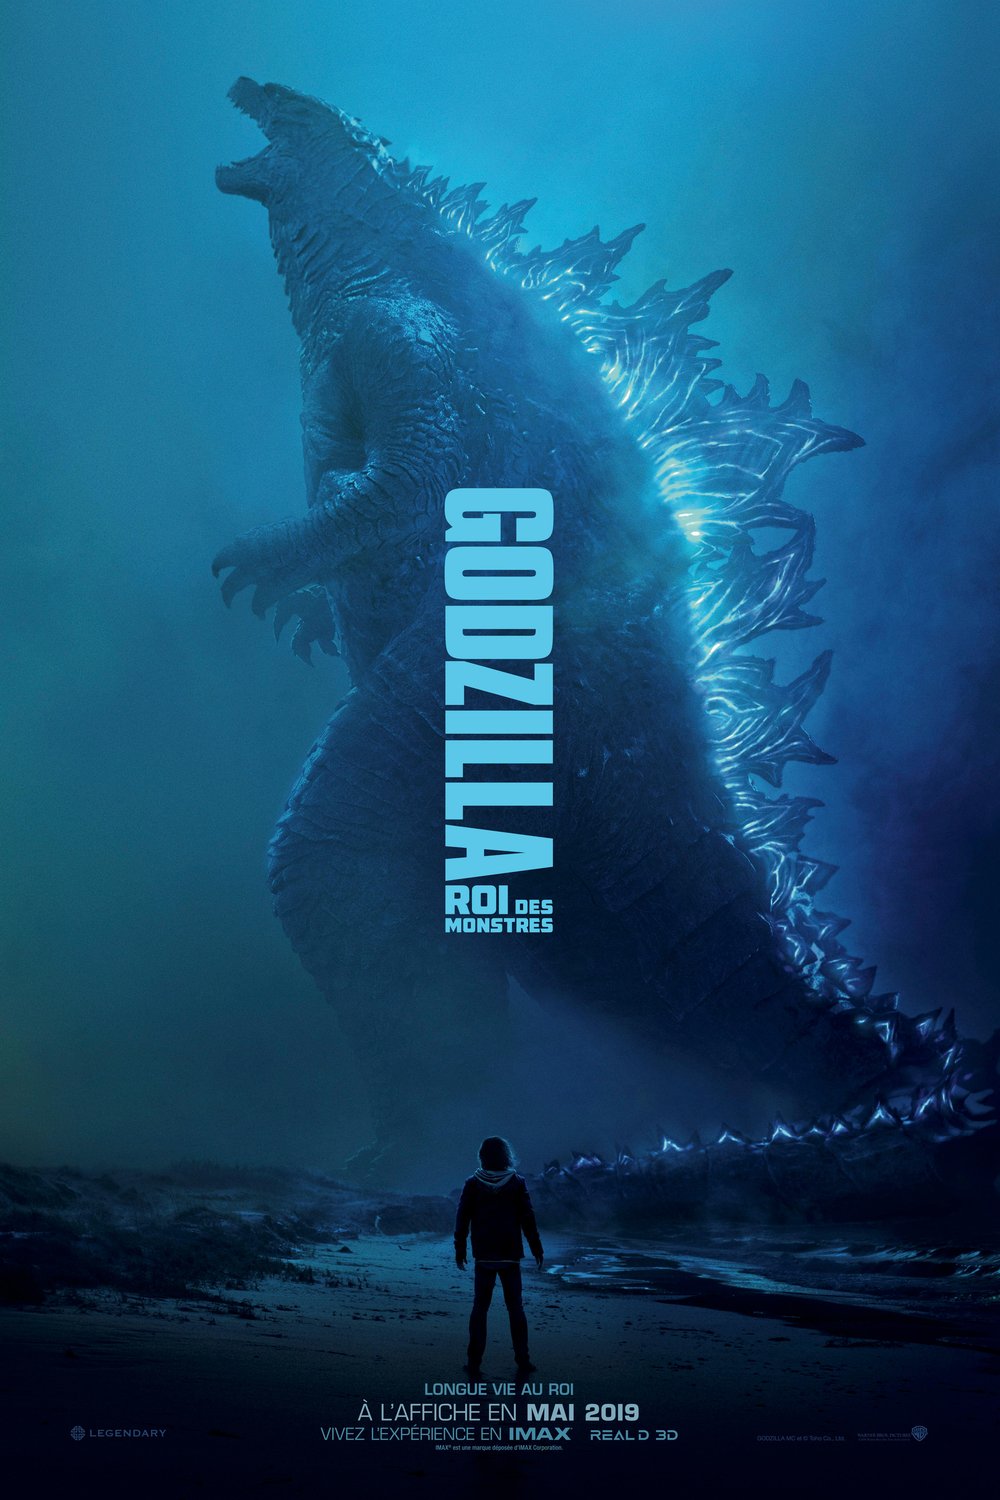 Poster of the movie Godzilla: Roi des monstres